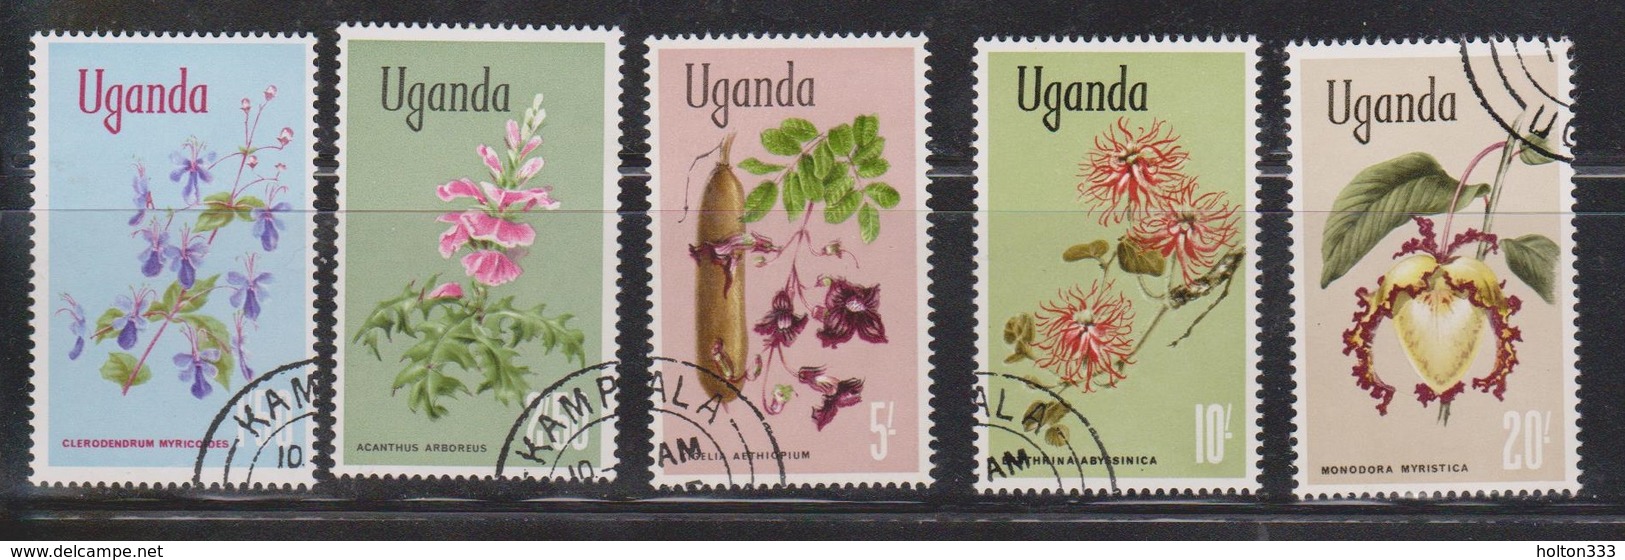 UGANDA Scott # 125-9 Used - Flowers - Uganda (1962-...)